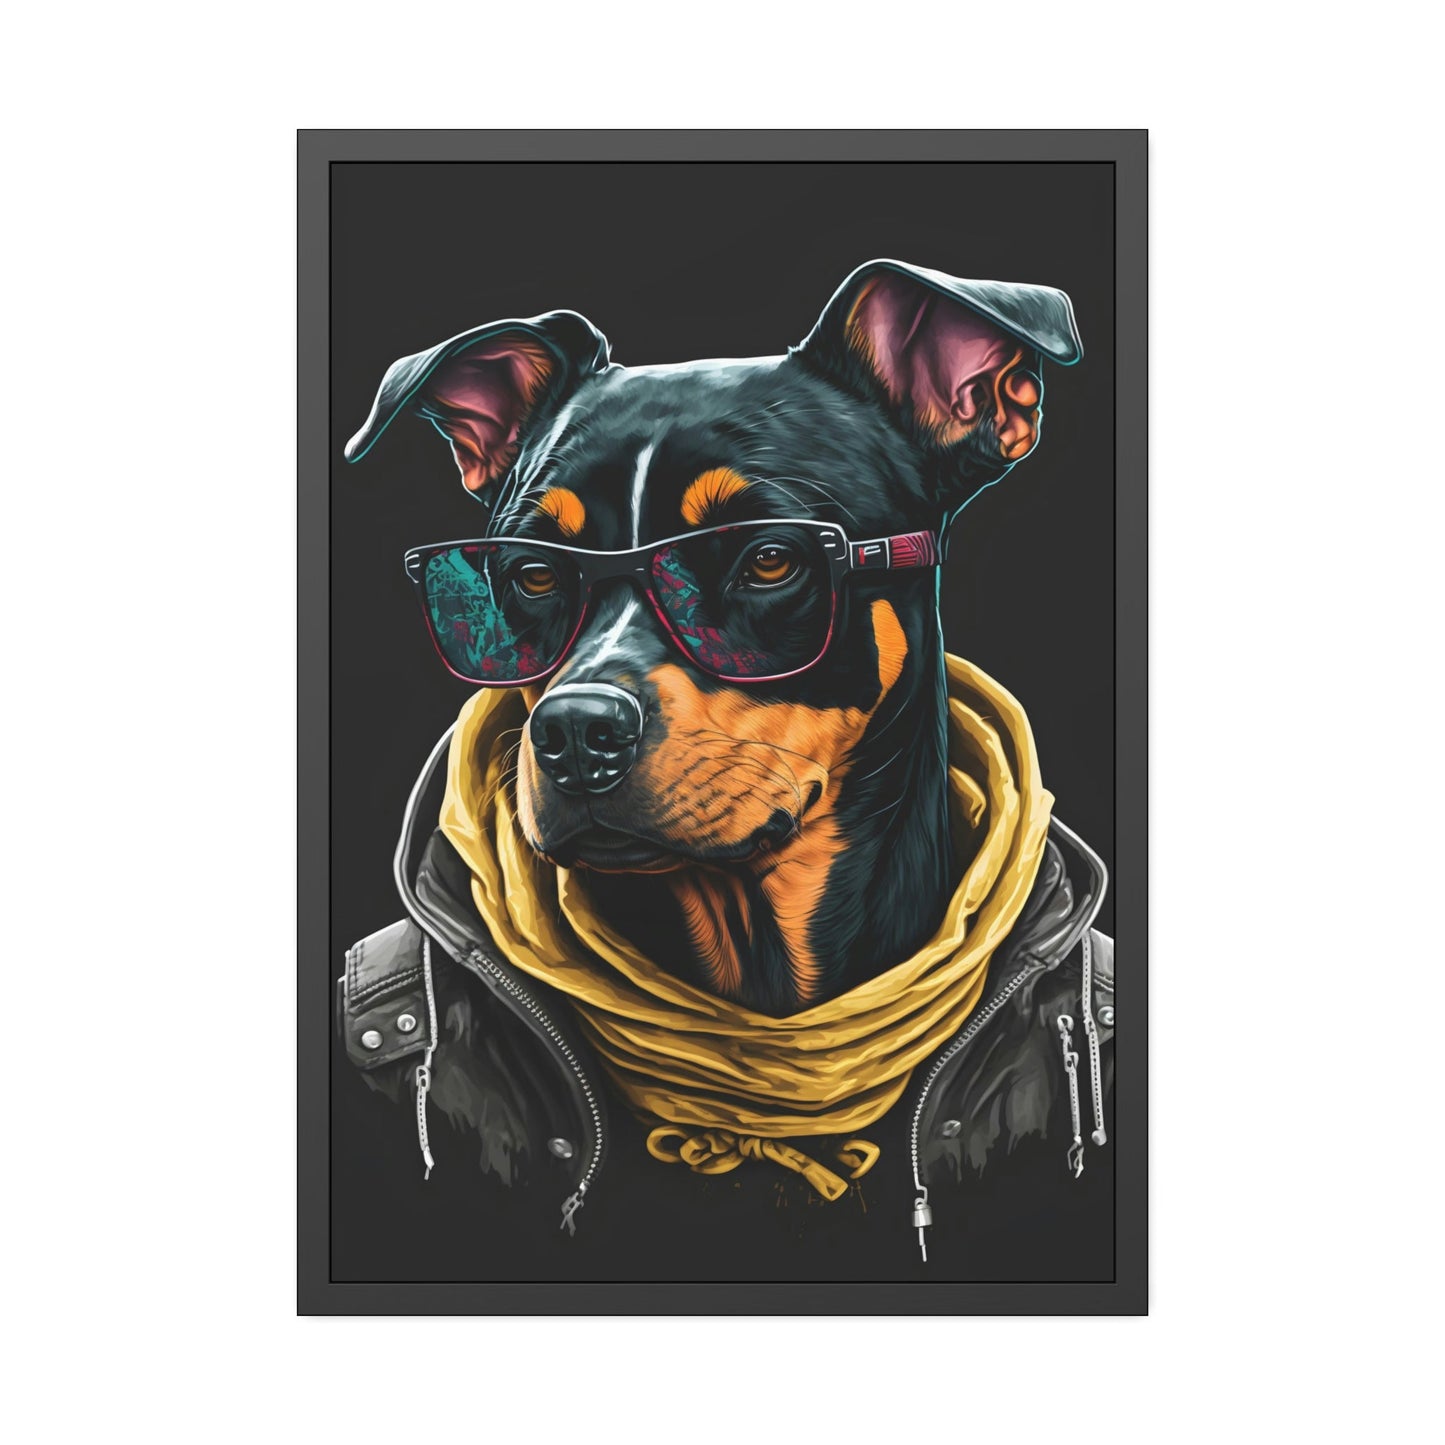 Dog's Best Friend: Poster of a Beloved Canine on Framed Canvas